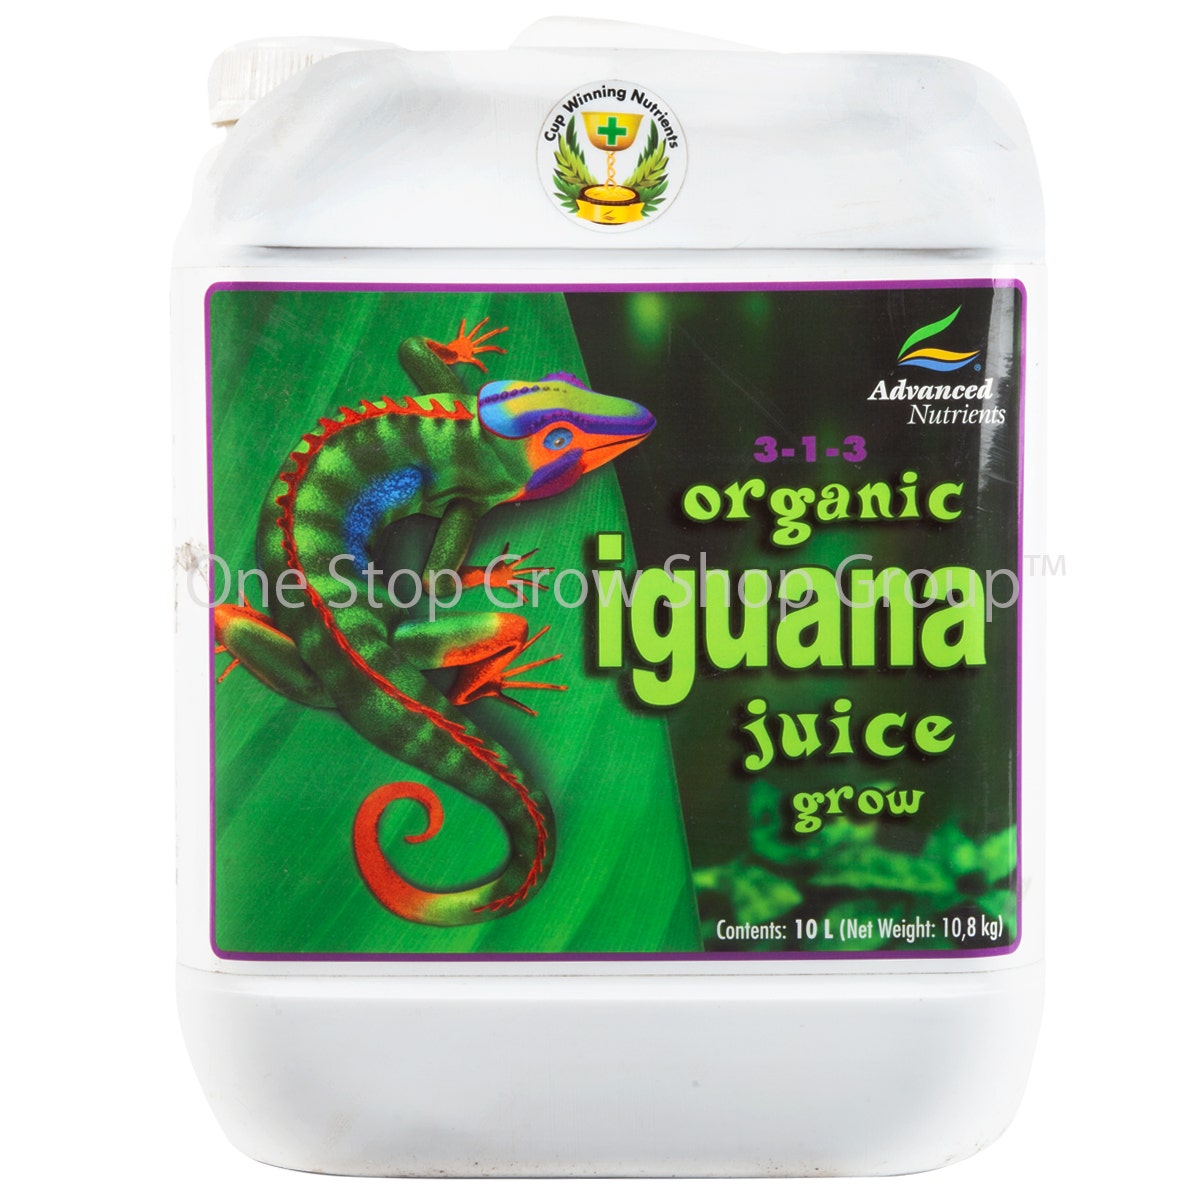 Advanced Nutrients Iguana Juice Grow
